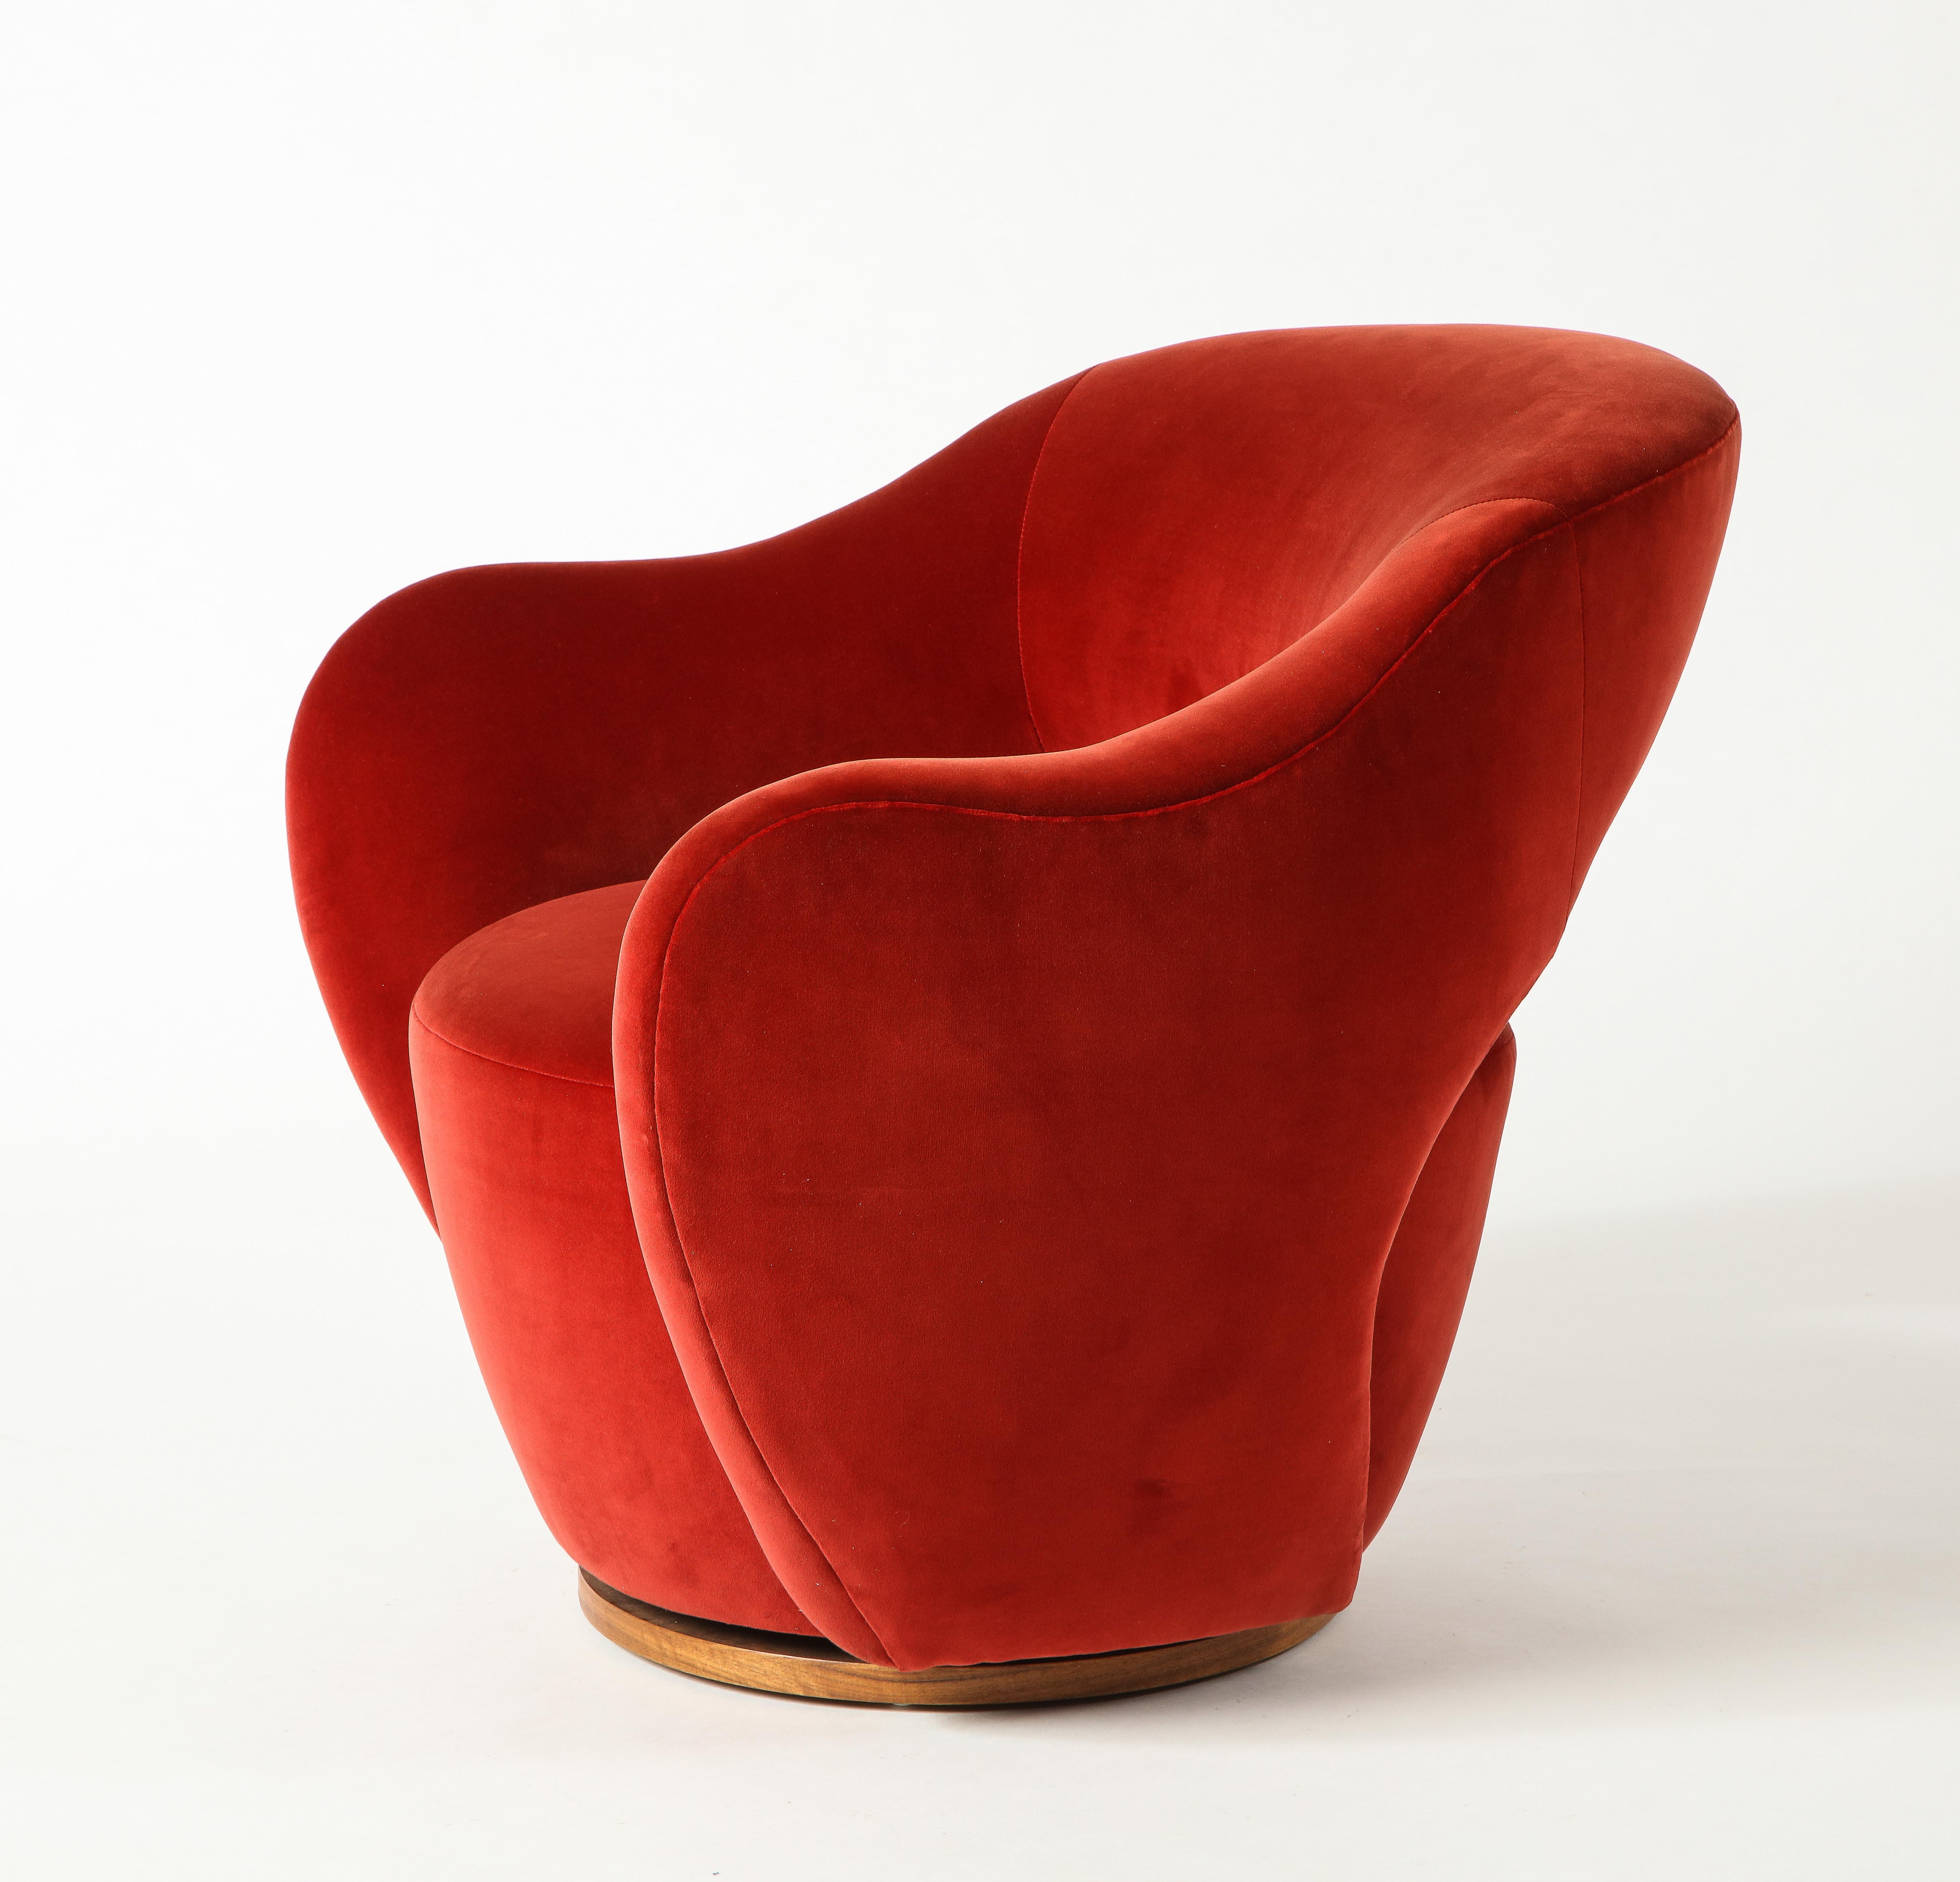 American Vladimir Kagan Wysiwyg Chair with Red Upholstery & Natural Walnut Swivel Base